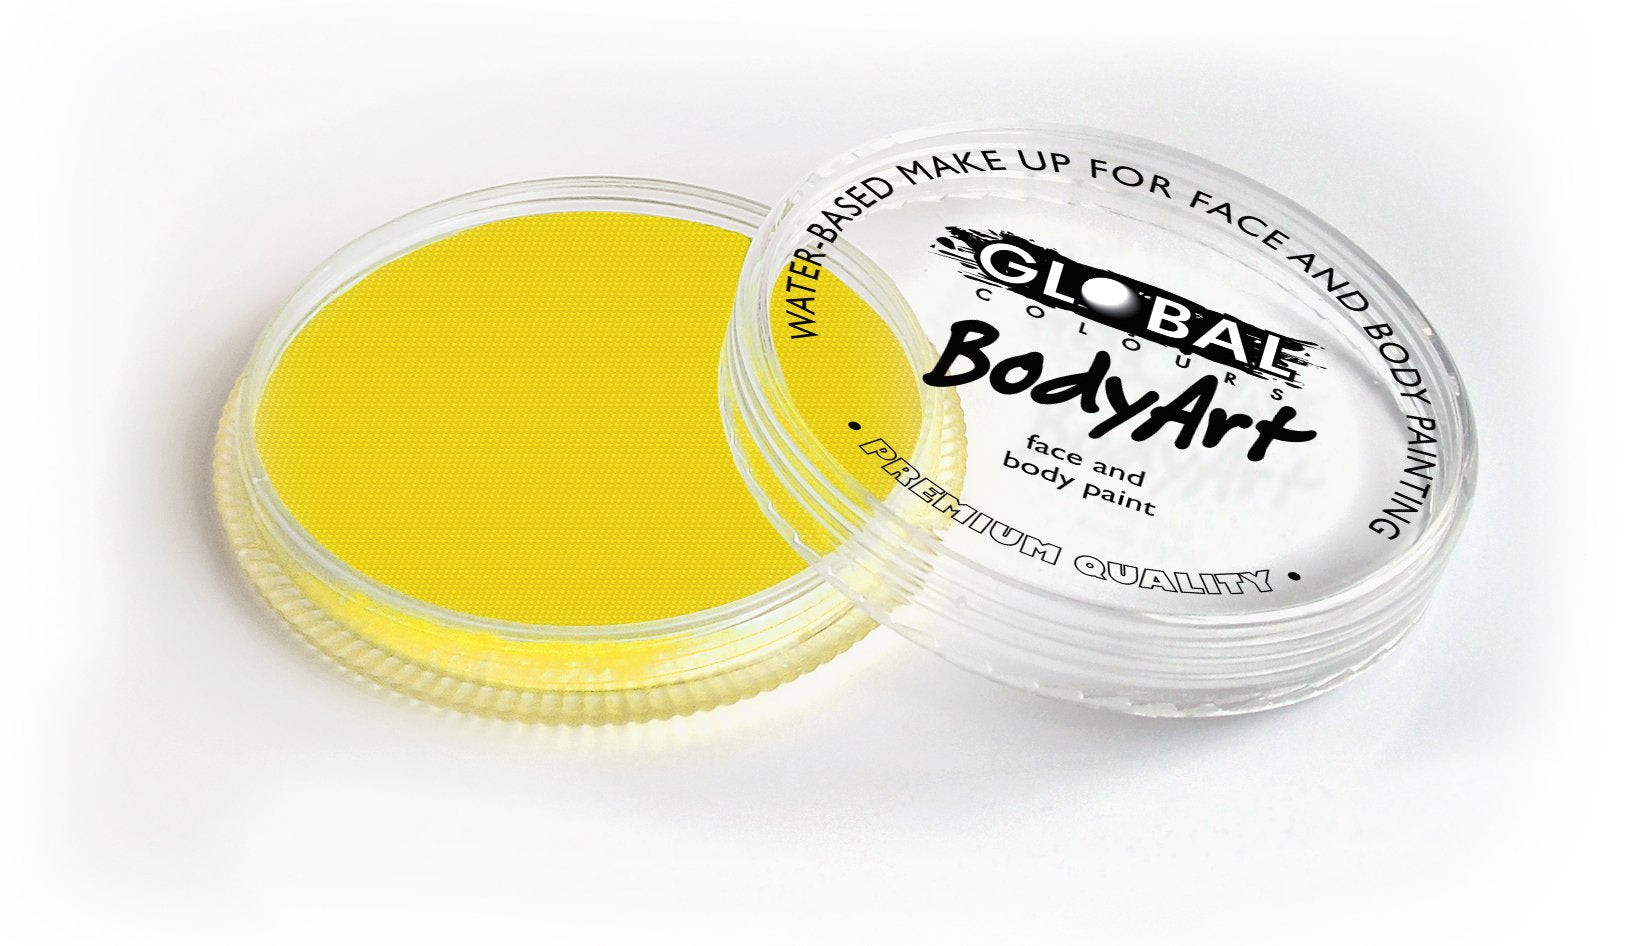 Face & Body Paint Bodyart Yellow Cake 32g